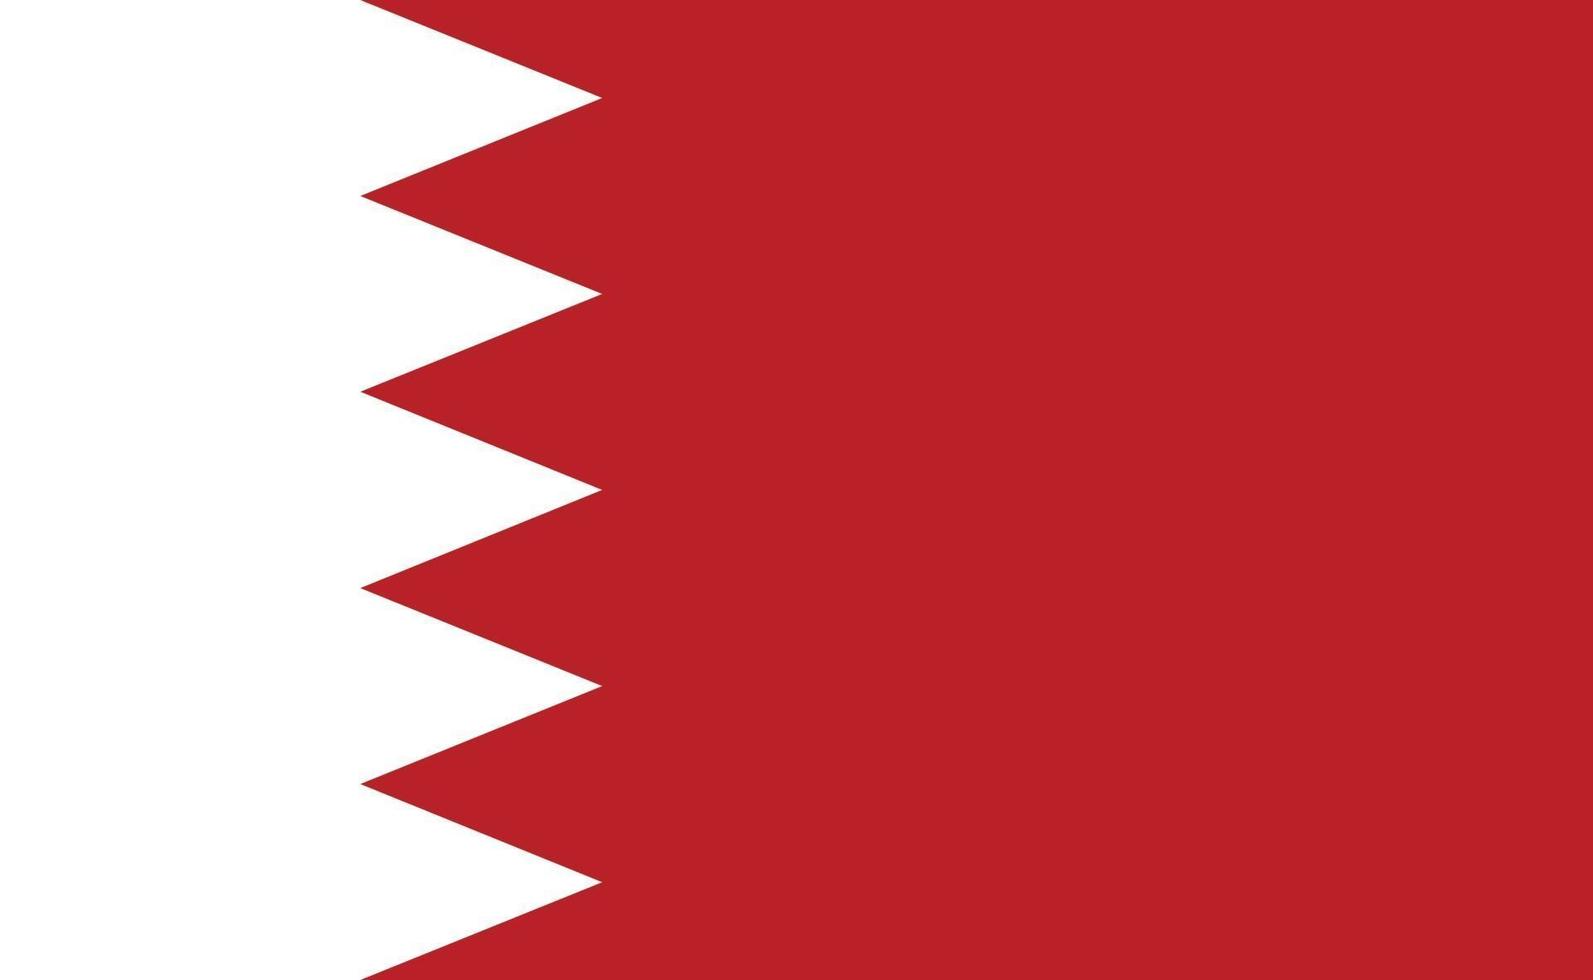 Bahrain nationella flagga i exakta proportioner - vektorillustration vektor